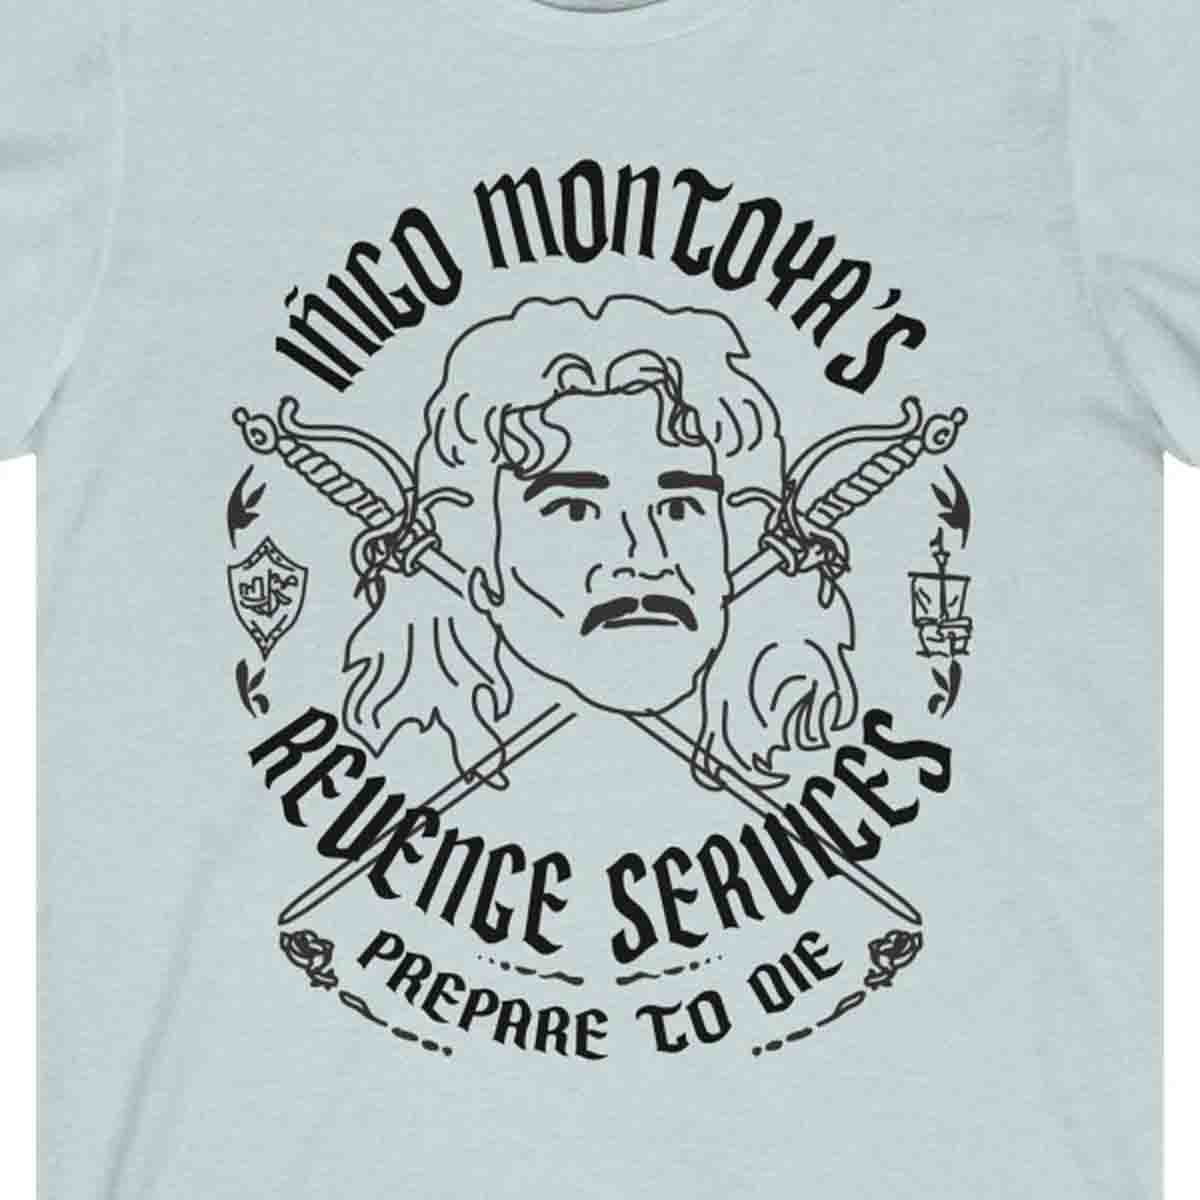 Inigo Montoya's Revenge Services Premium T-Shirt, Fairytale, Hero, Princess Rescue